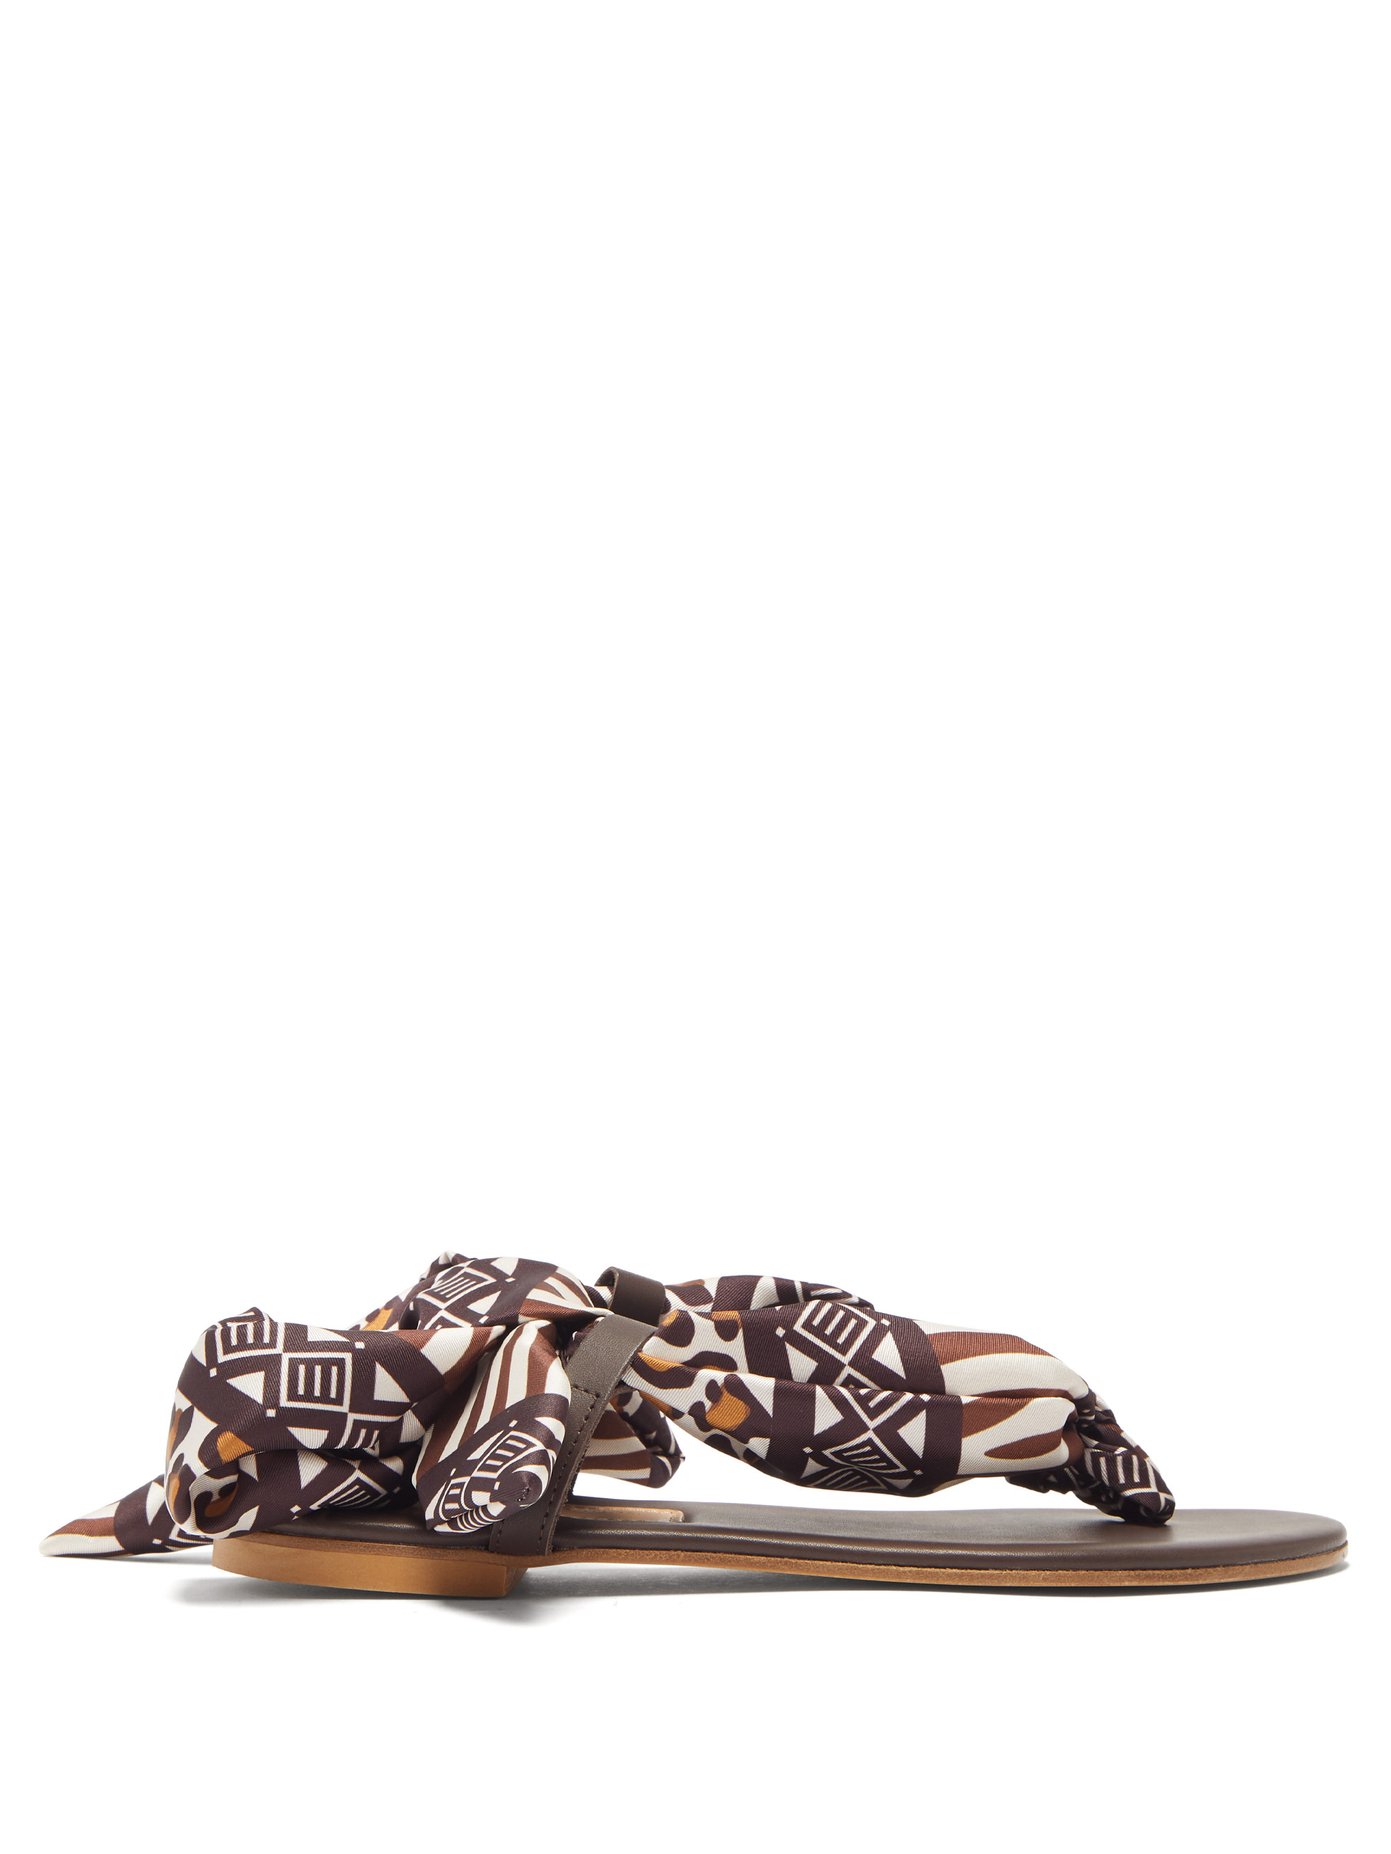 leopard print sandals uk